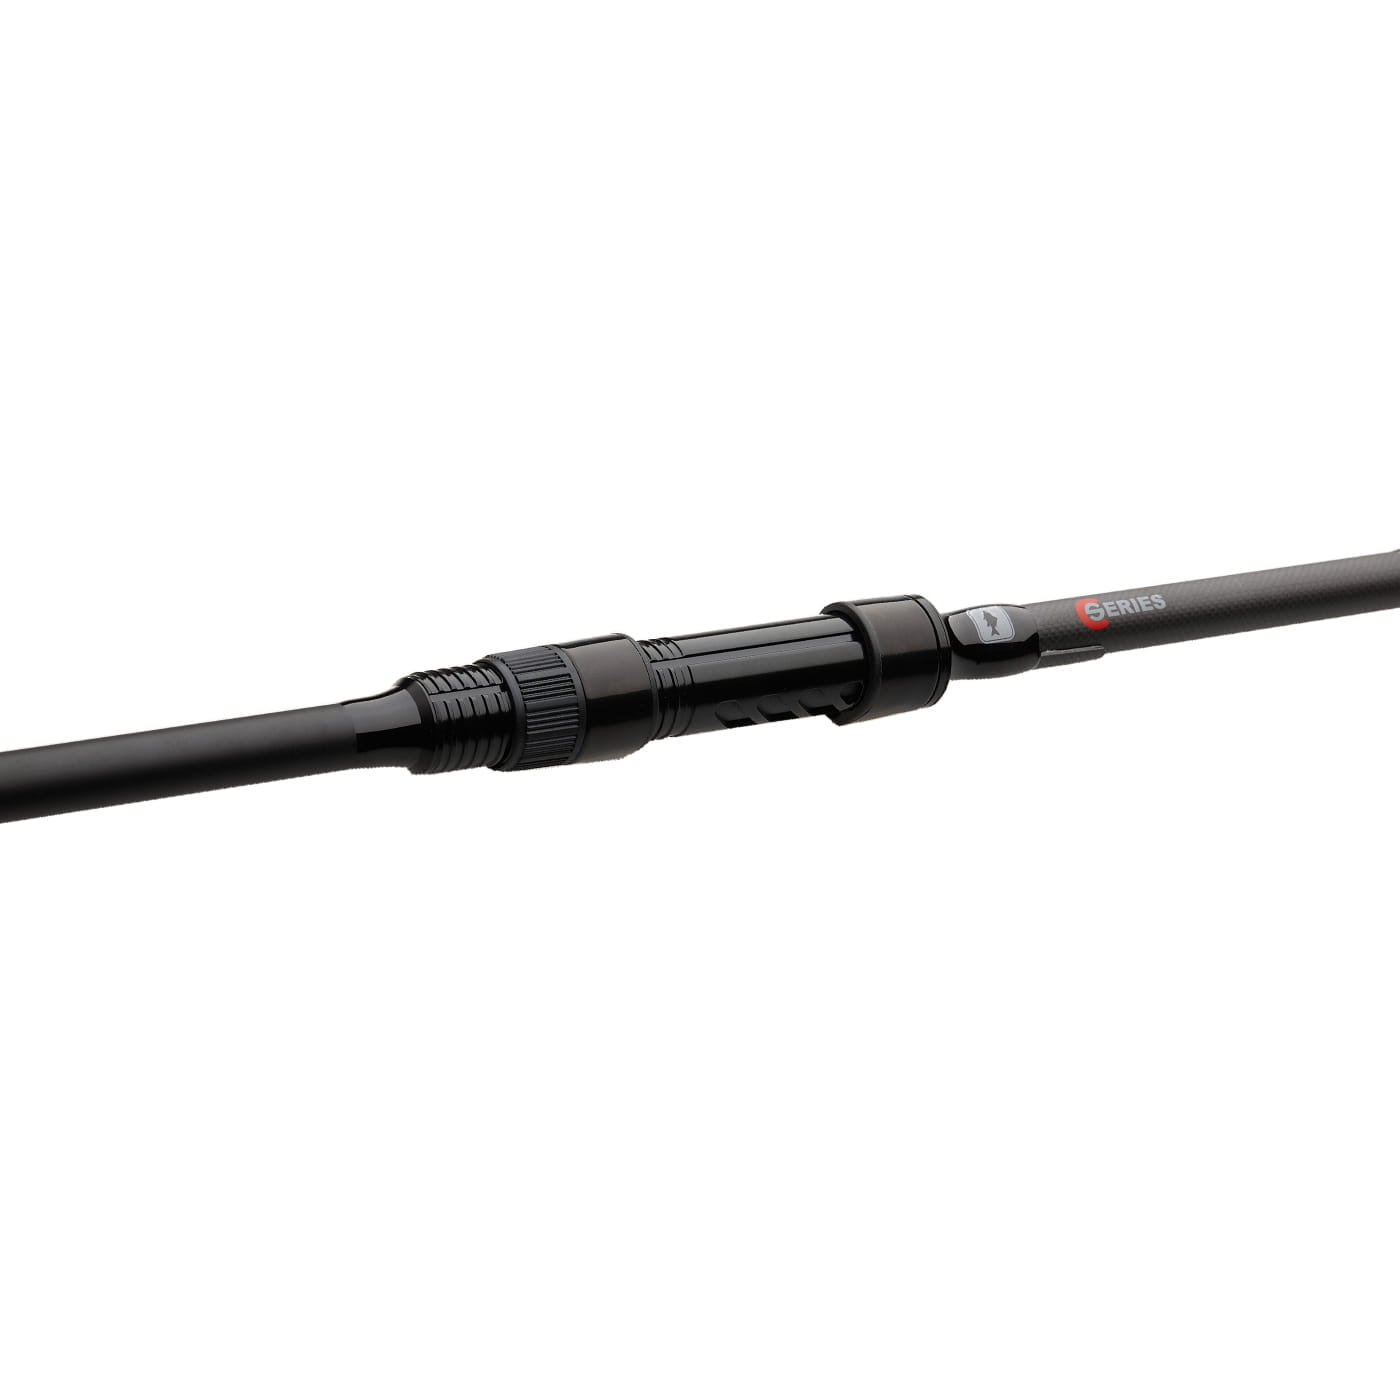 All Fishing Buy, 13ft Telescopic Carp Rod, Japan Carbon, 13' Fishing  Casting Rod.